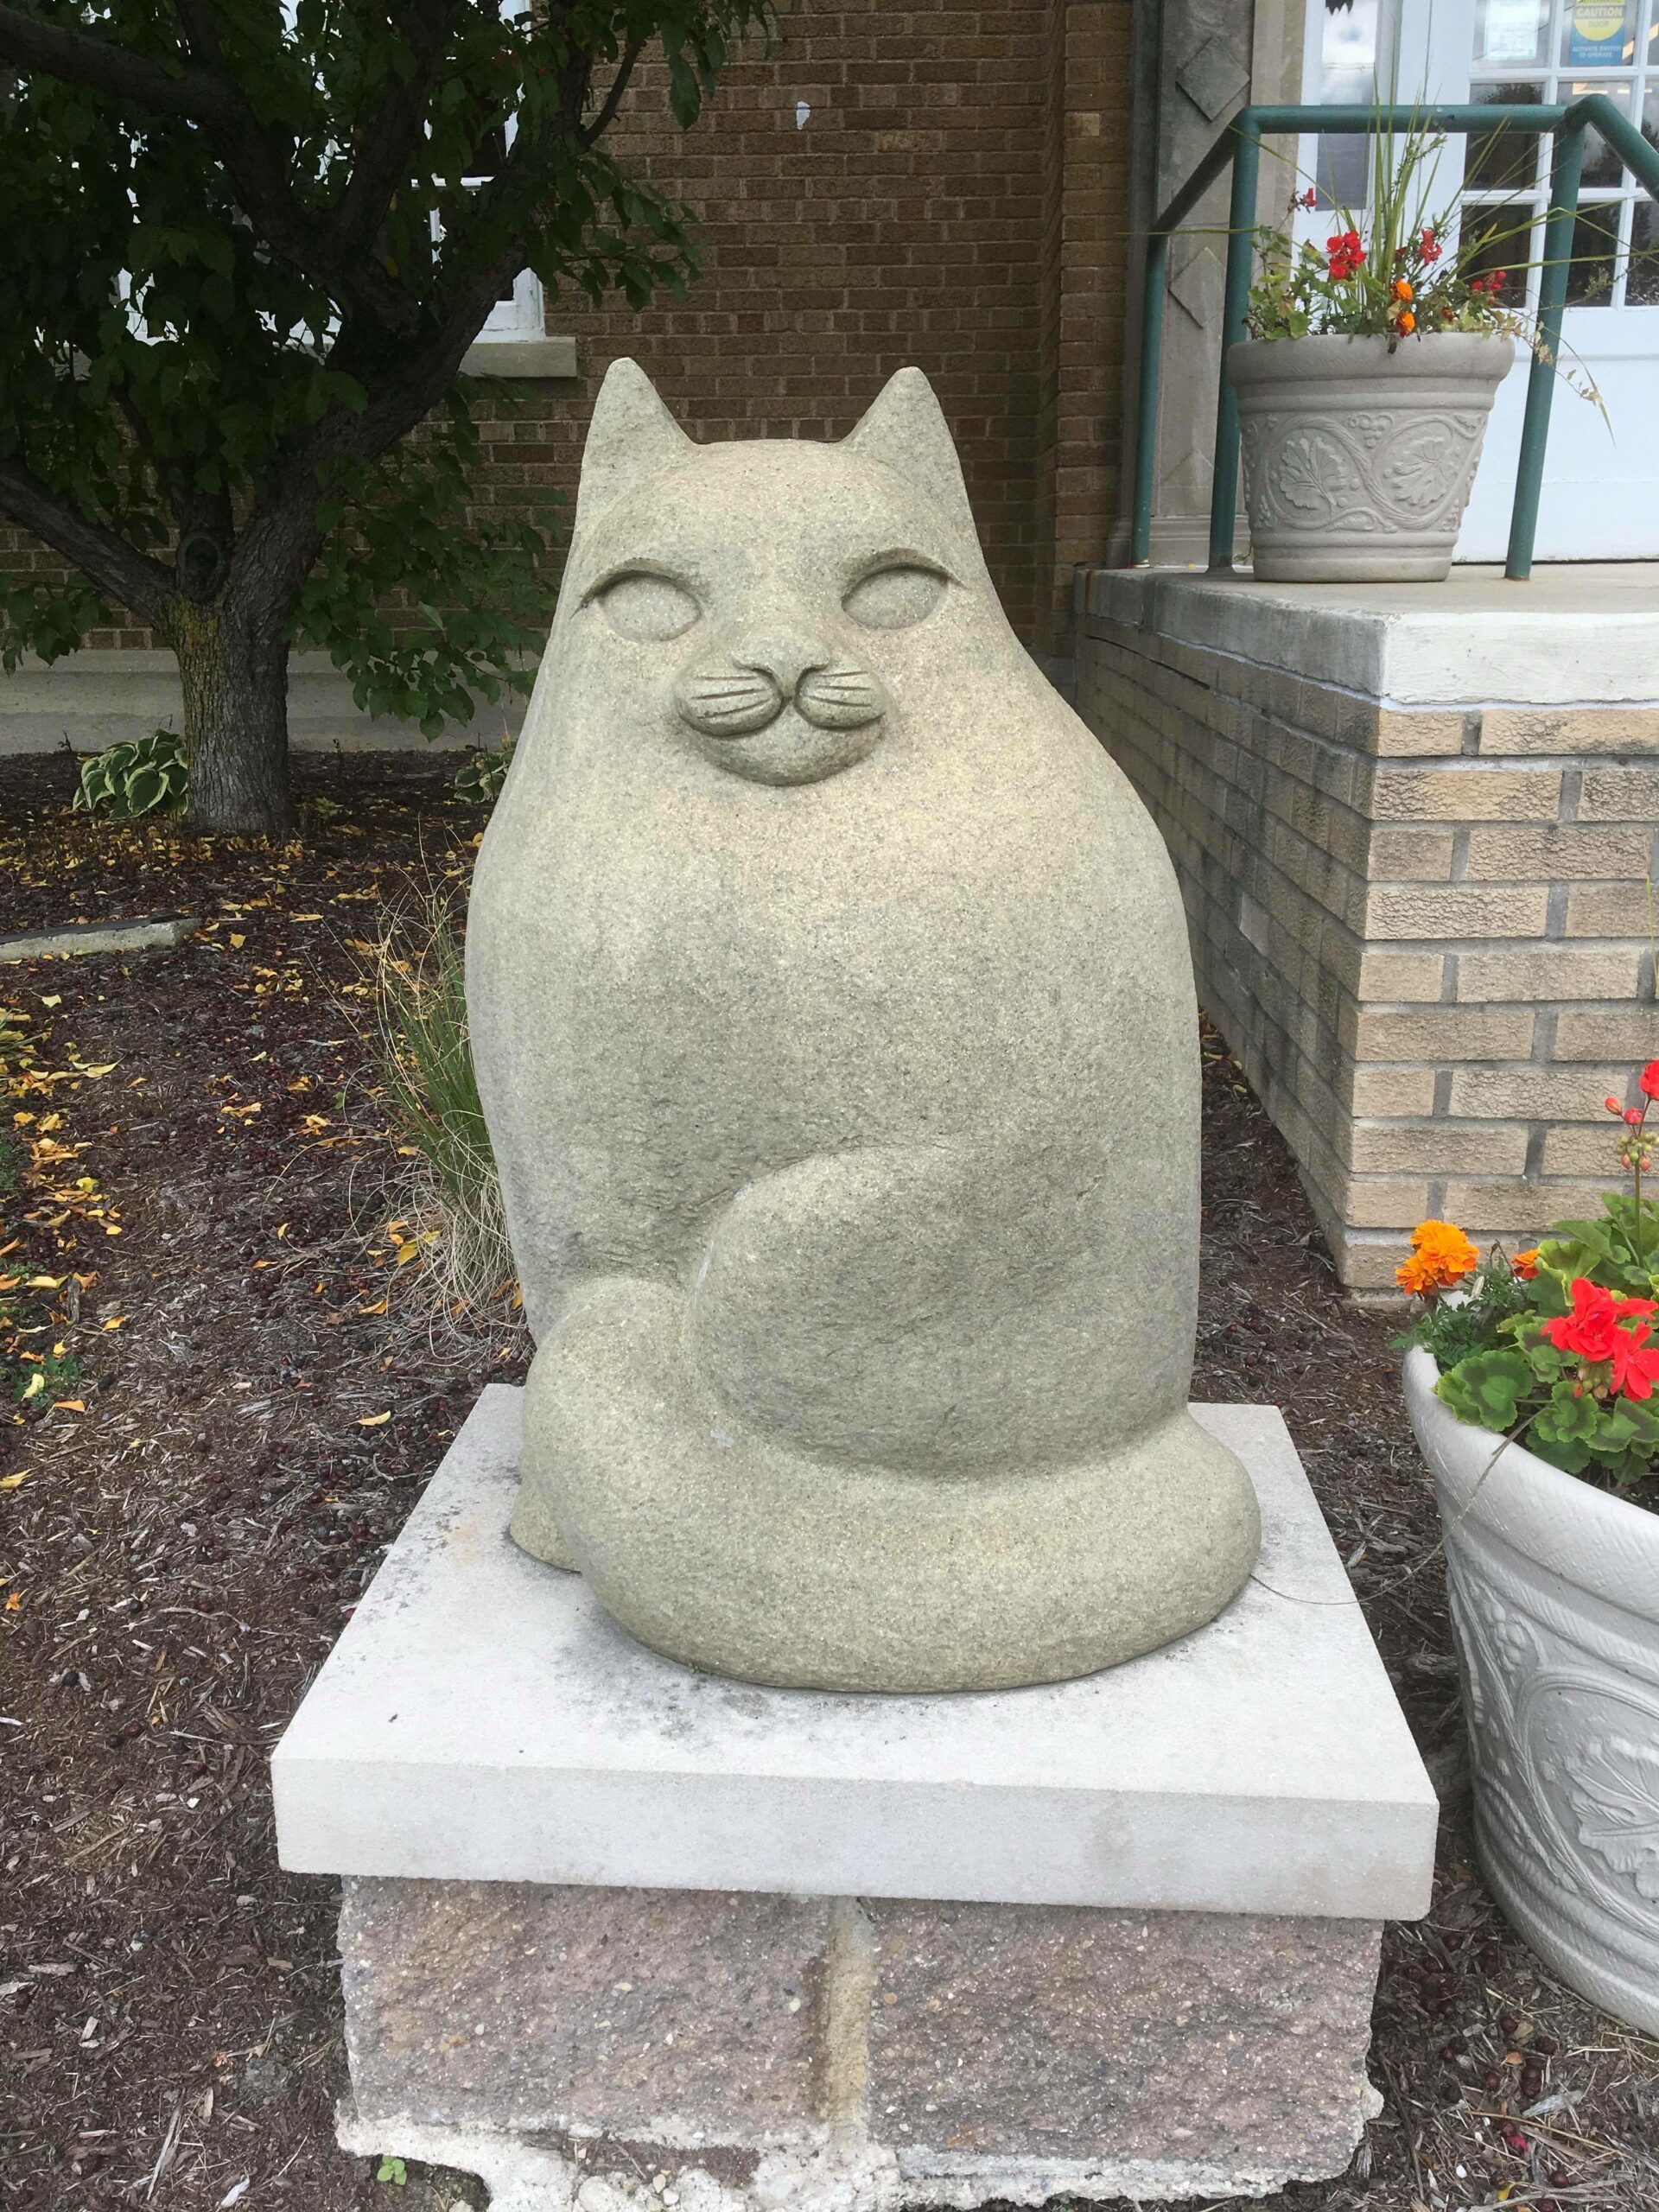 Webster the cat sculpture